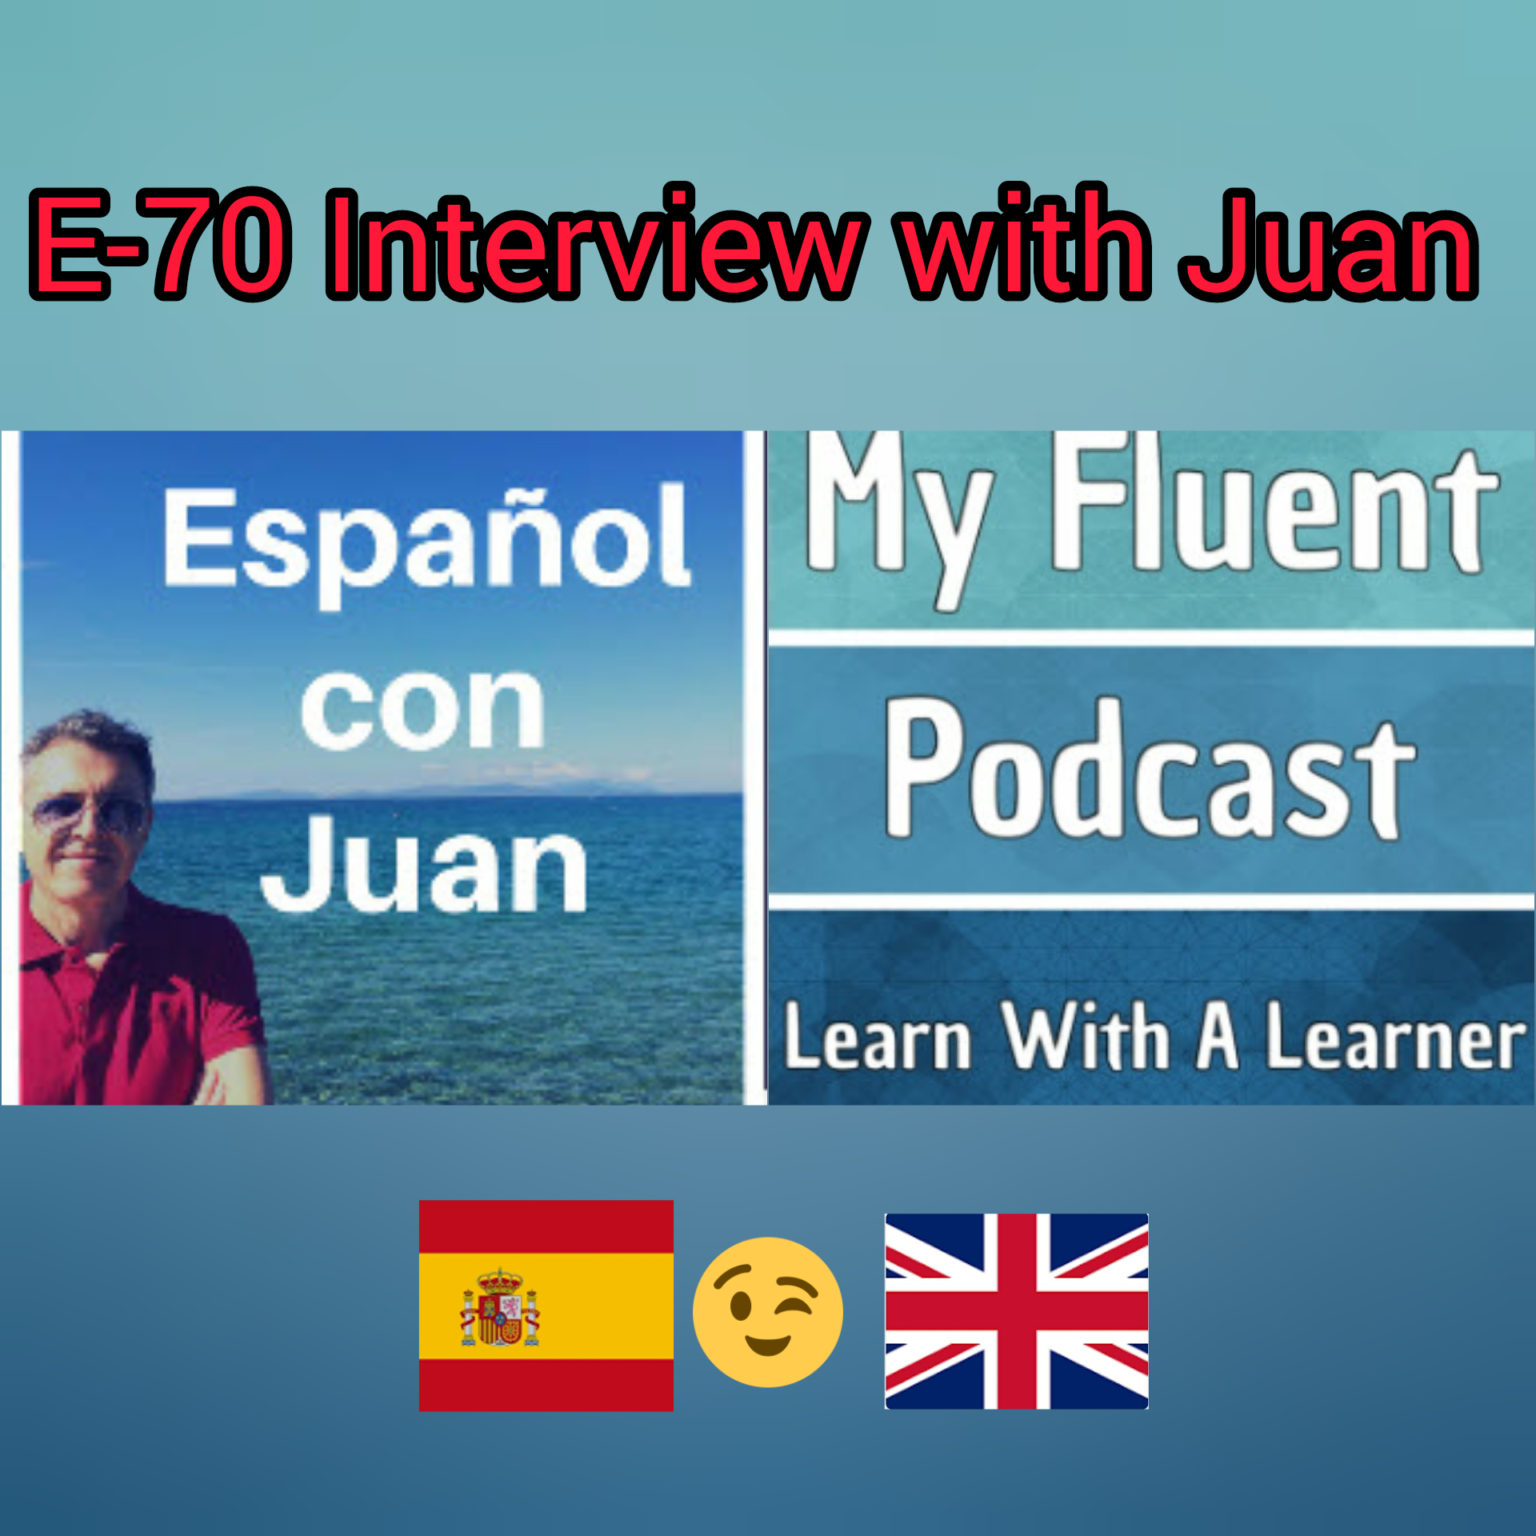 juans not listening in spanish